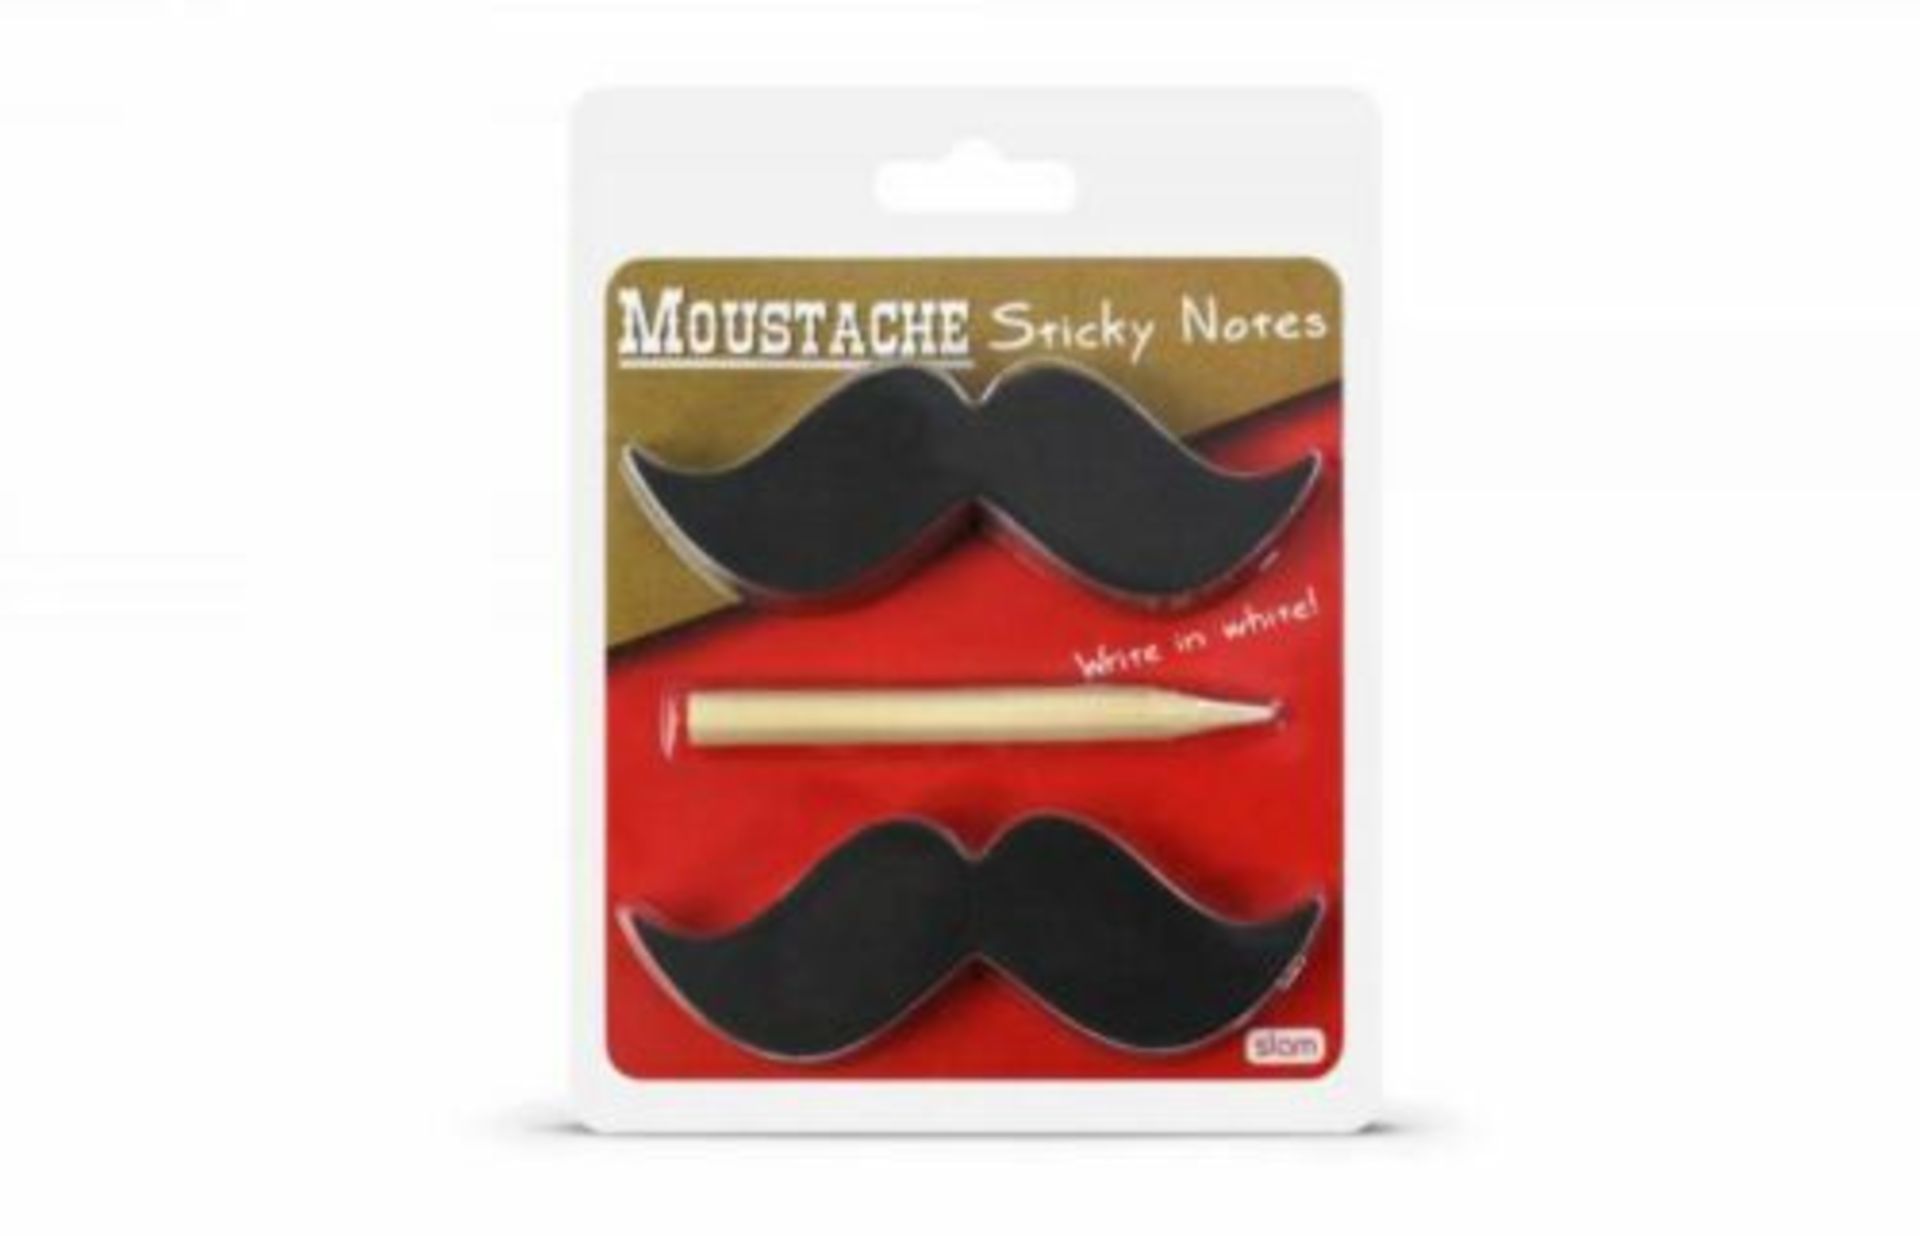 Moustache Sticky Notes & Pencil Packs - 200 Notes Per Pack - 20 Units Per Lot